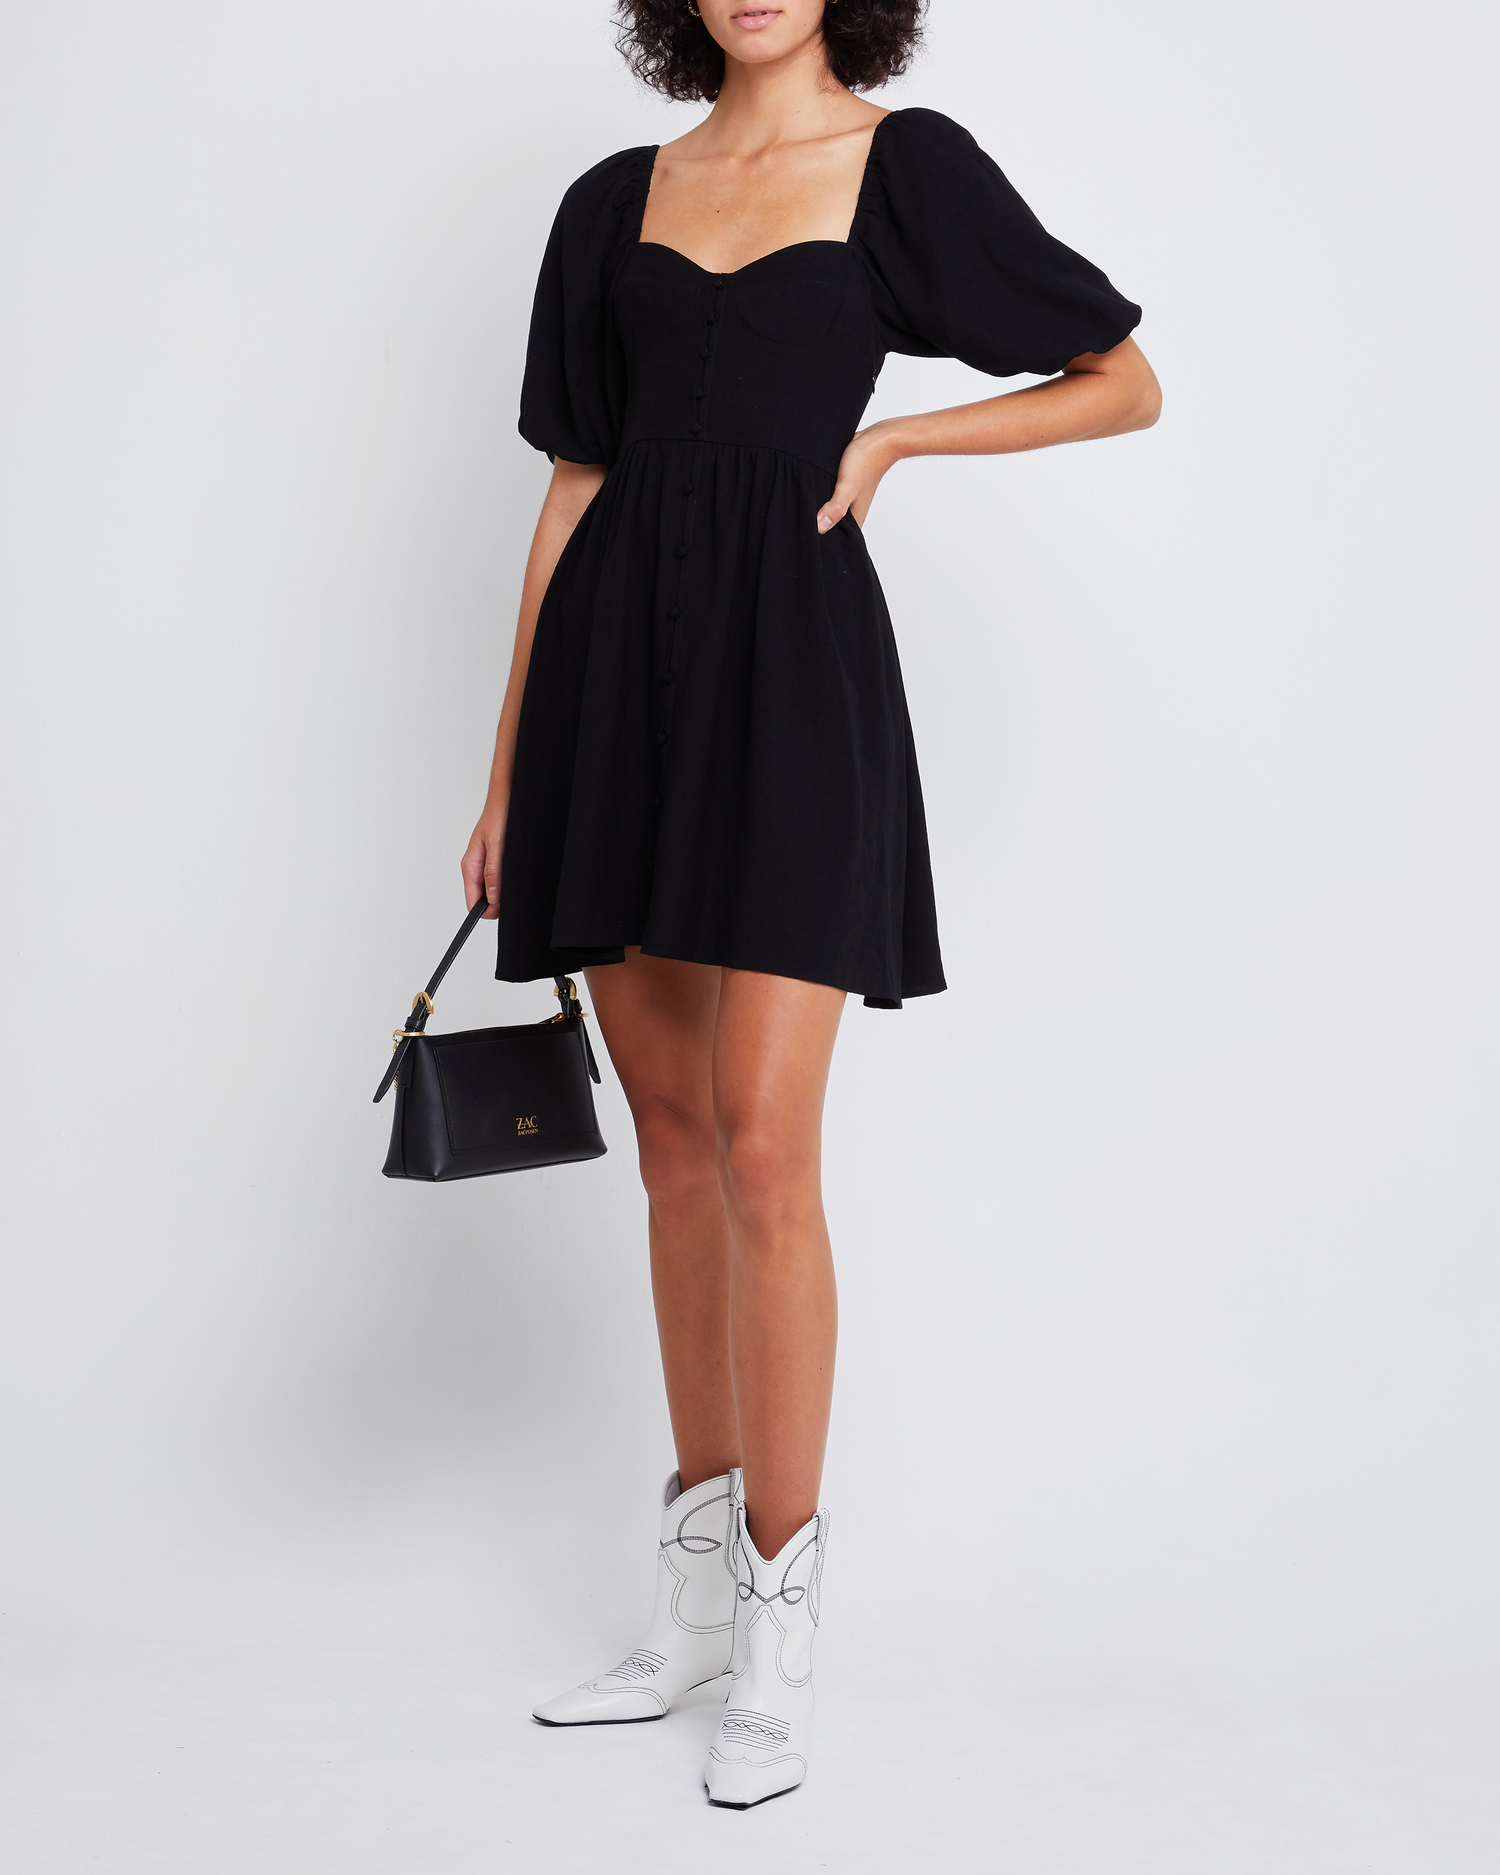 First image of Esperanza Mini Dress, a black mini dress, sweetheart neckline, midi sleeves, 3/4 sleeves, puff sleeves, A-line